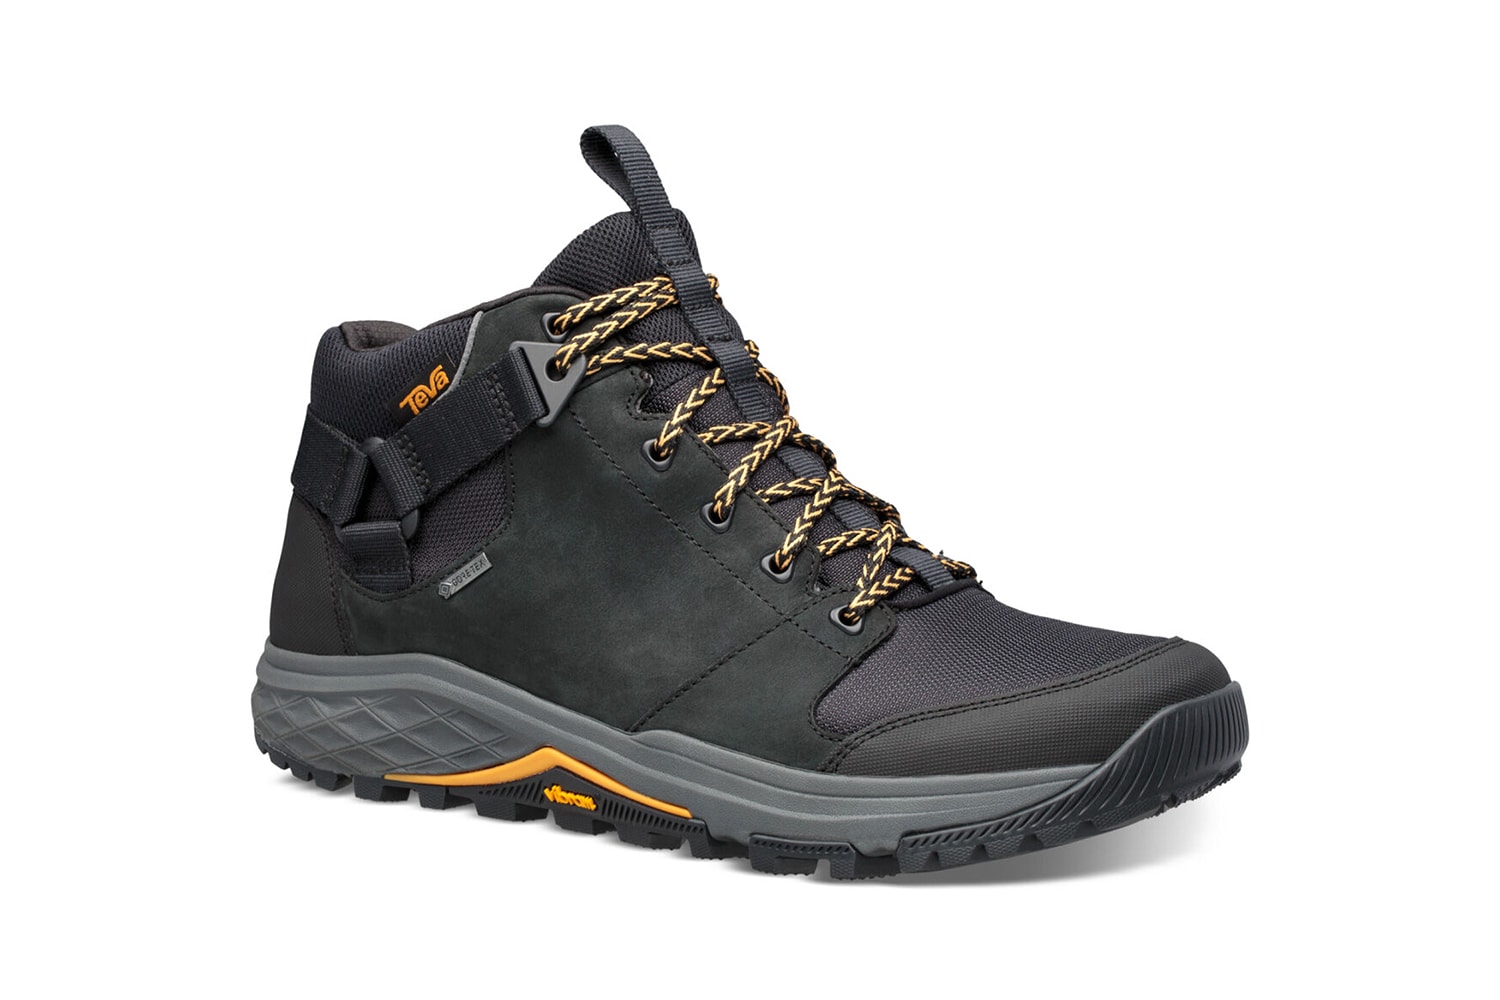 Teva Grandview GTX  footwear boots vibram gore-tex outdoors shoes hiking trail running mega grip rain waterproof 